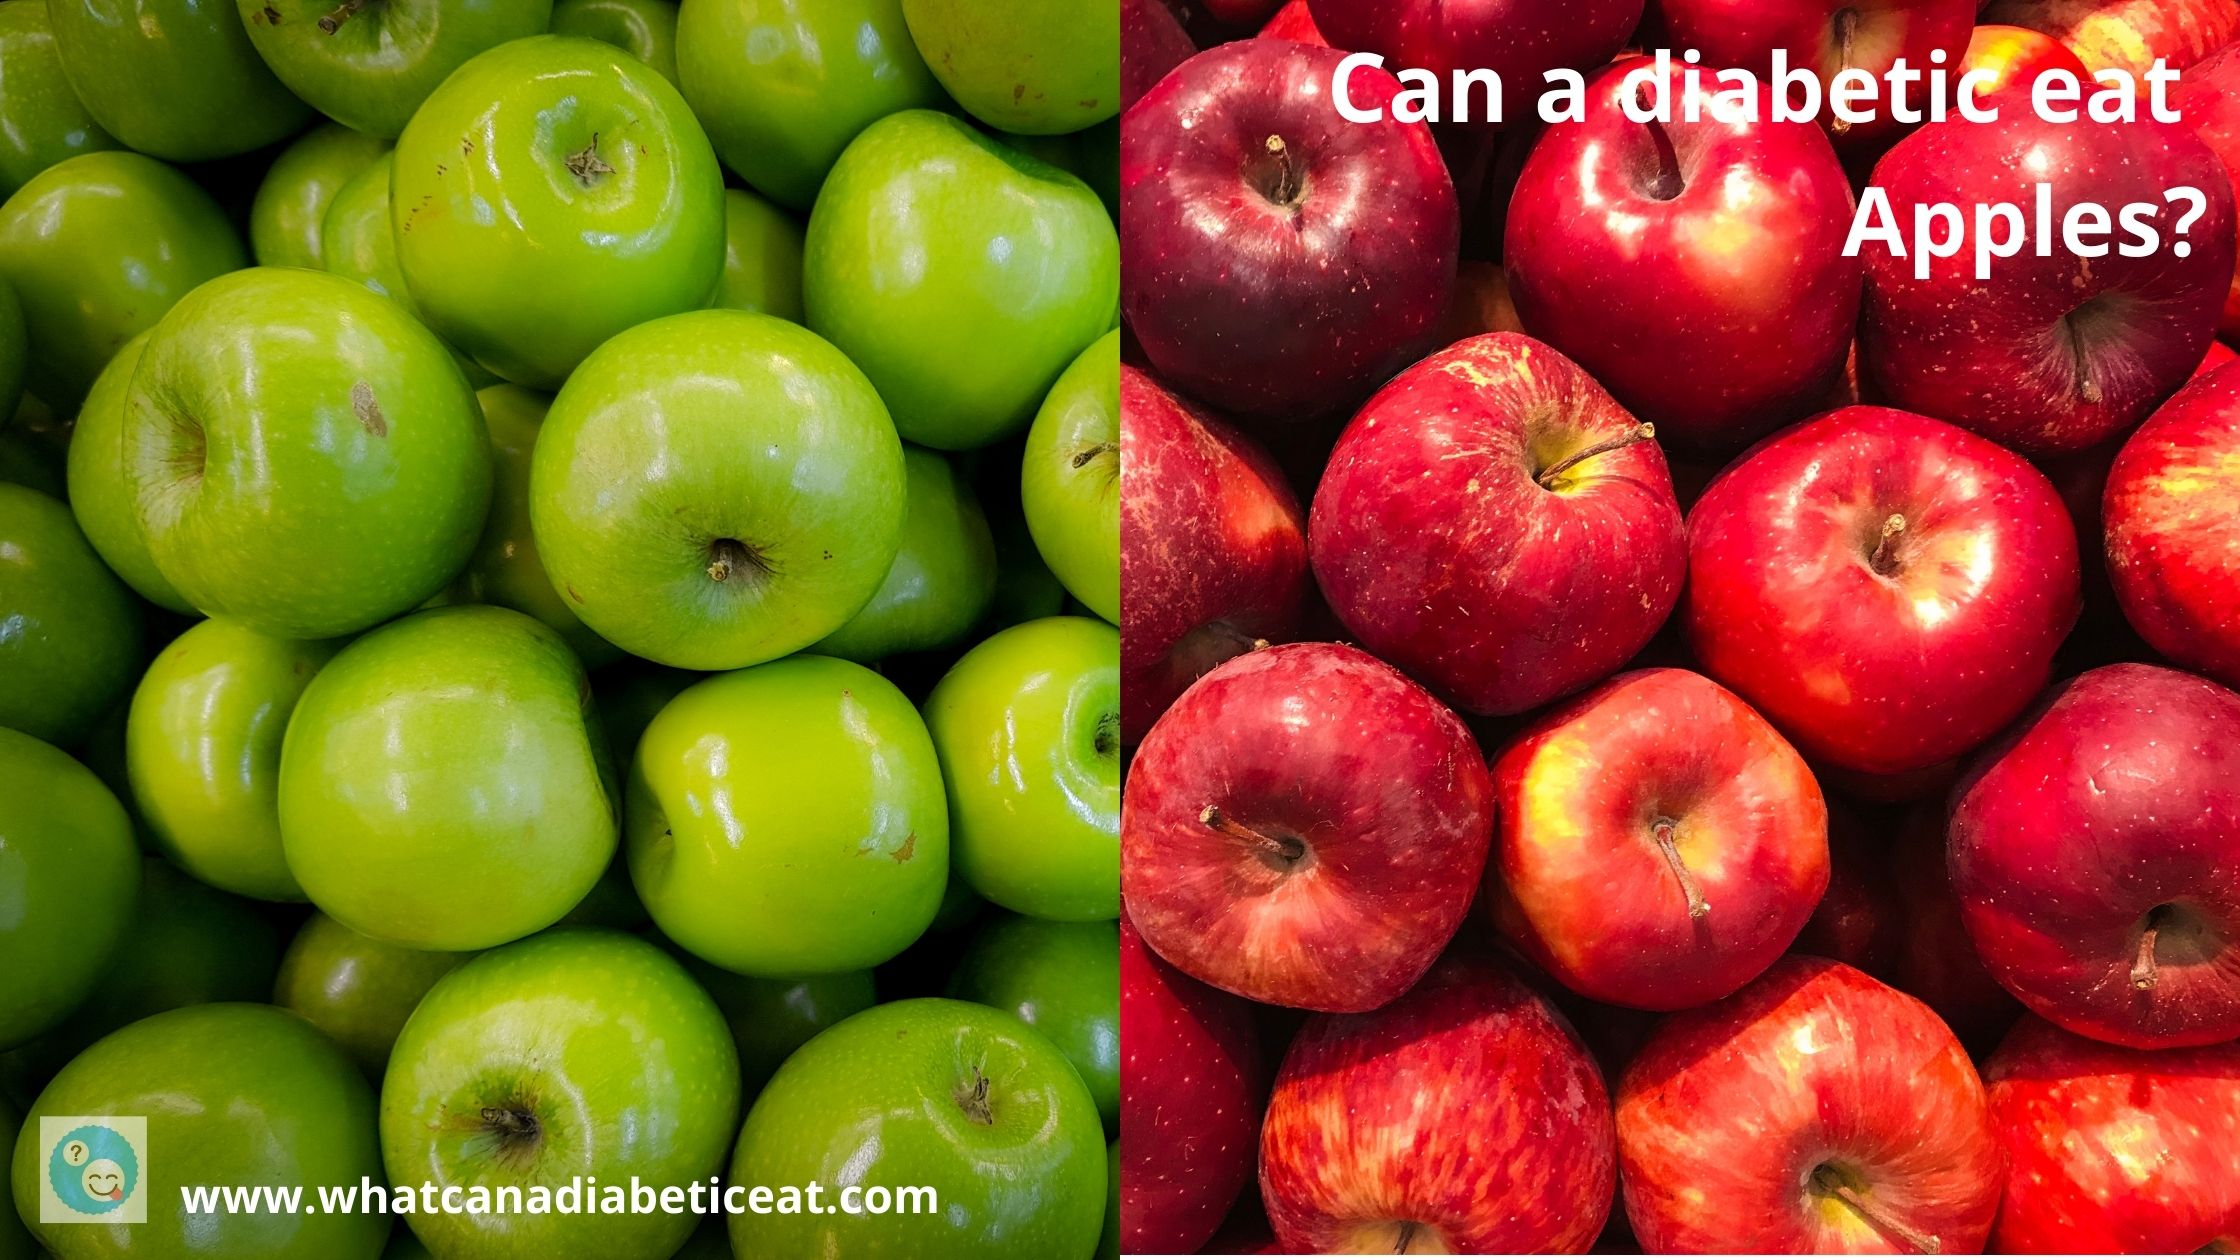 Can a diabetic eat Apples? Do apples raise blood sugar levels?